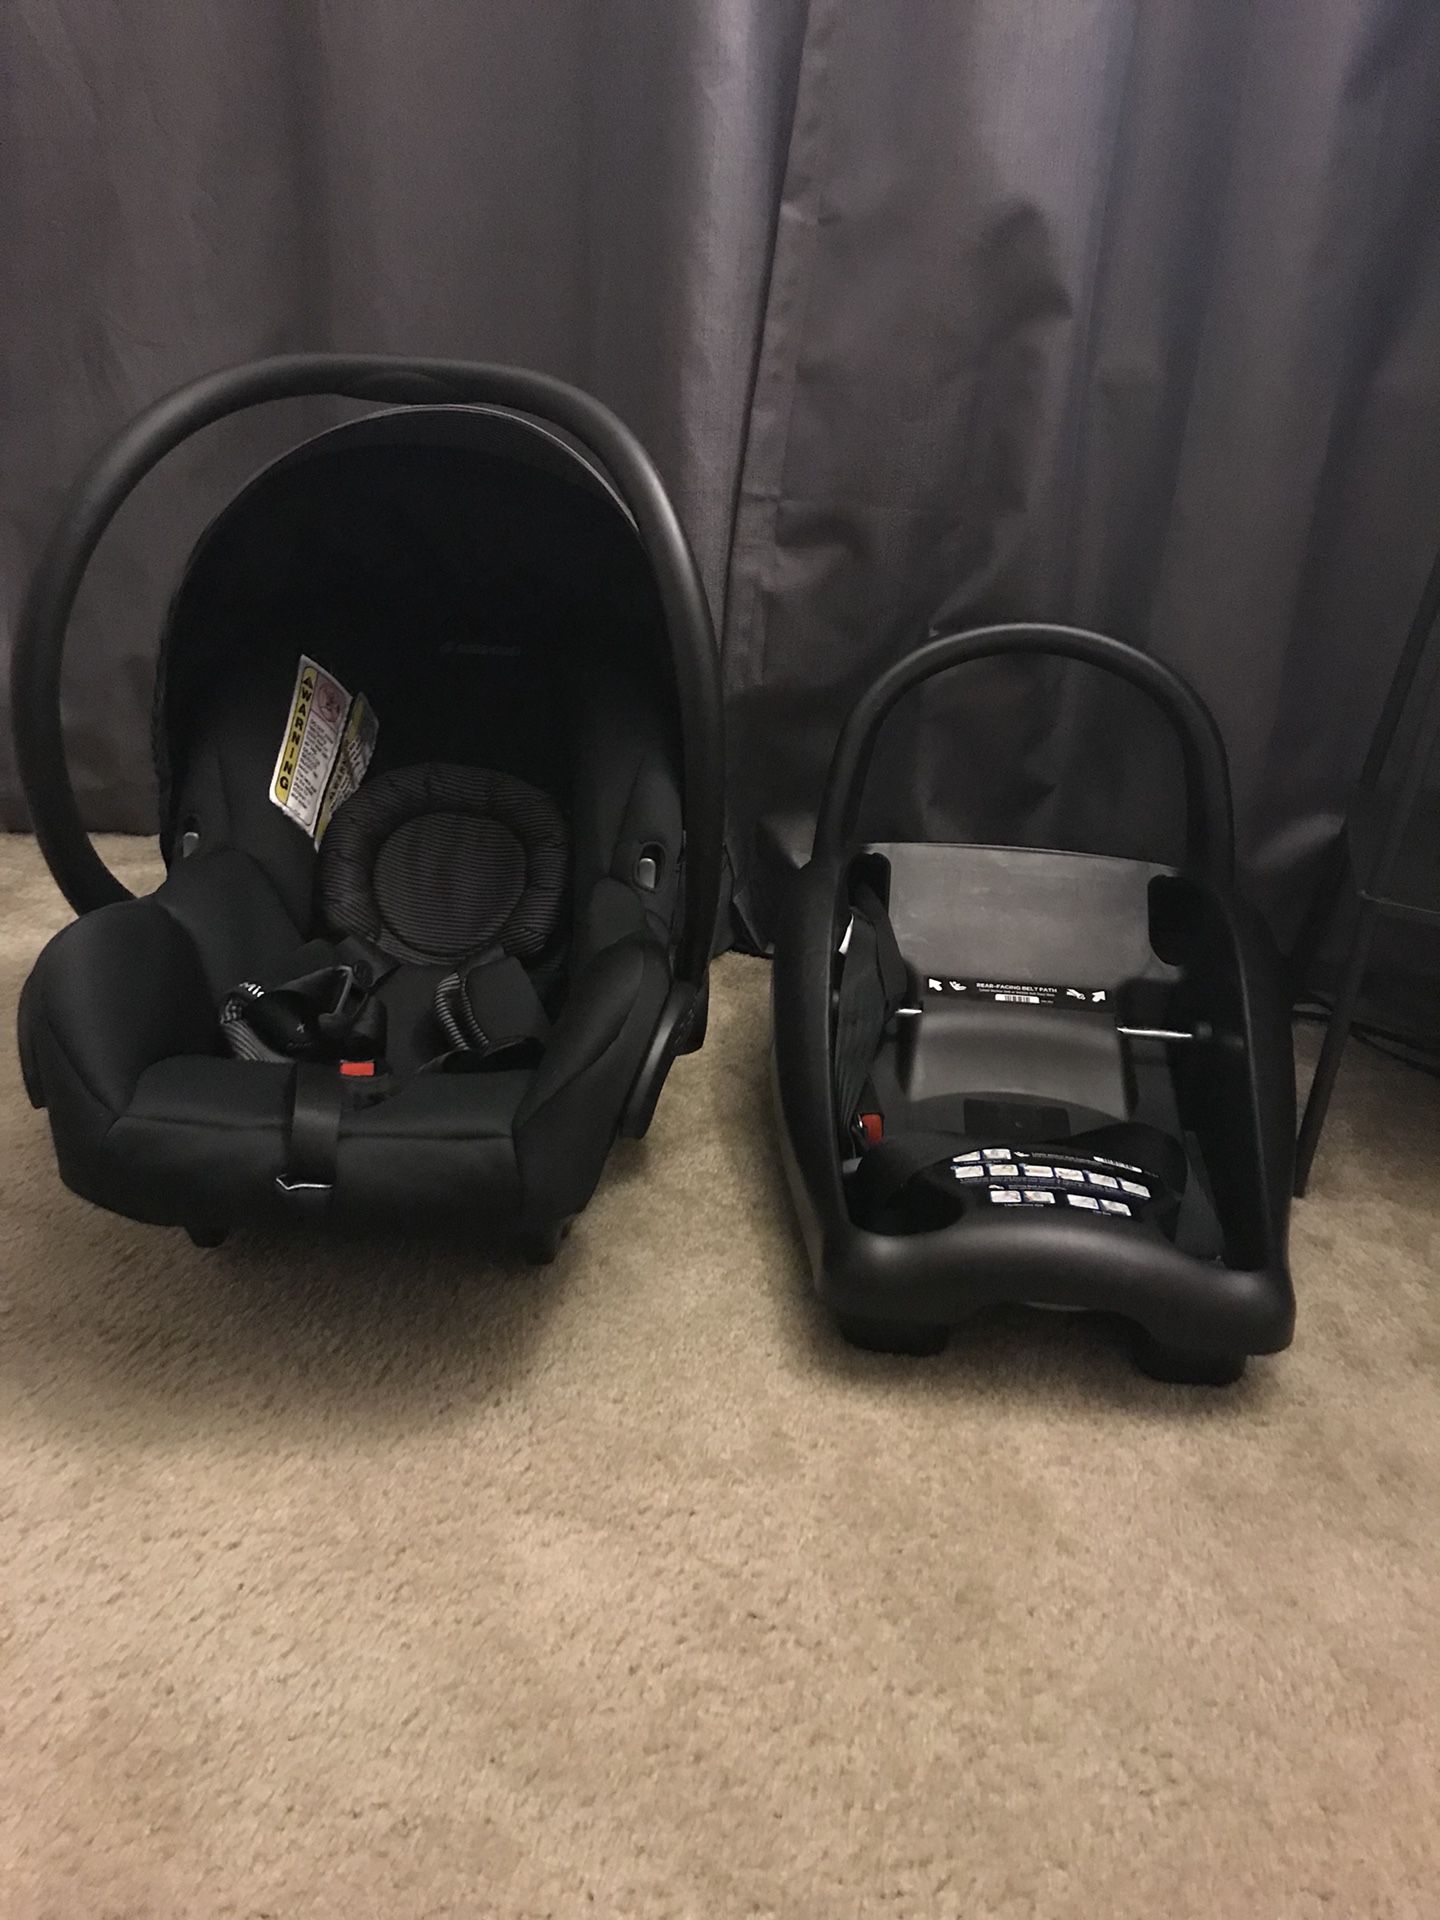 Infant car seat mico max maxi cosi with base